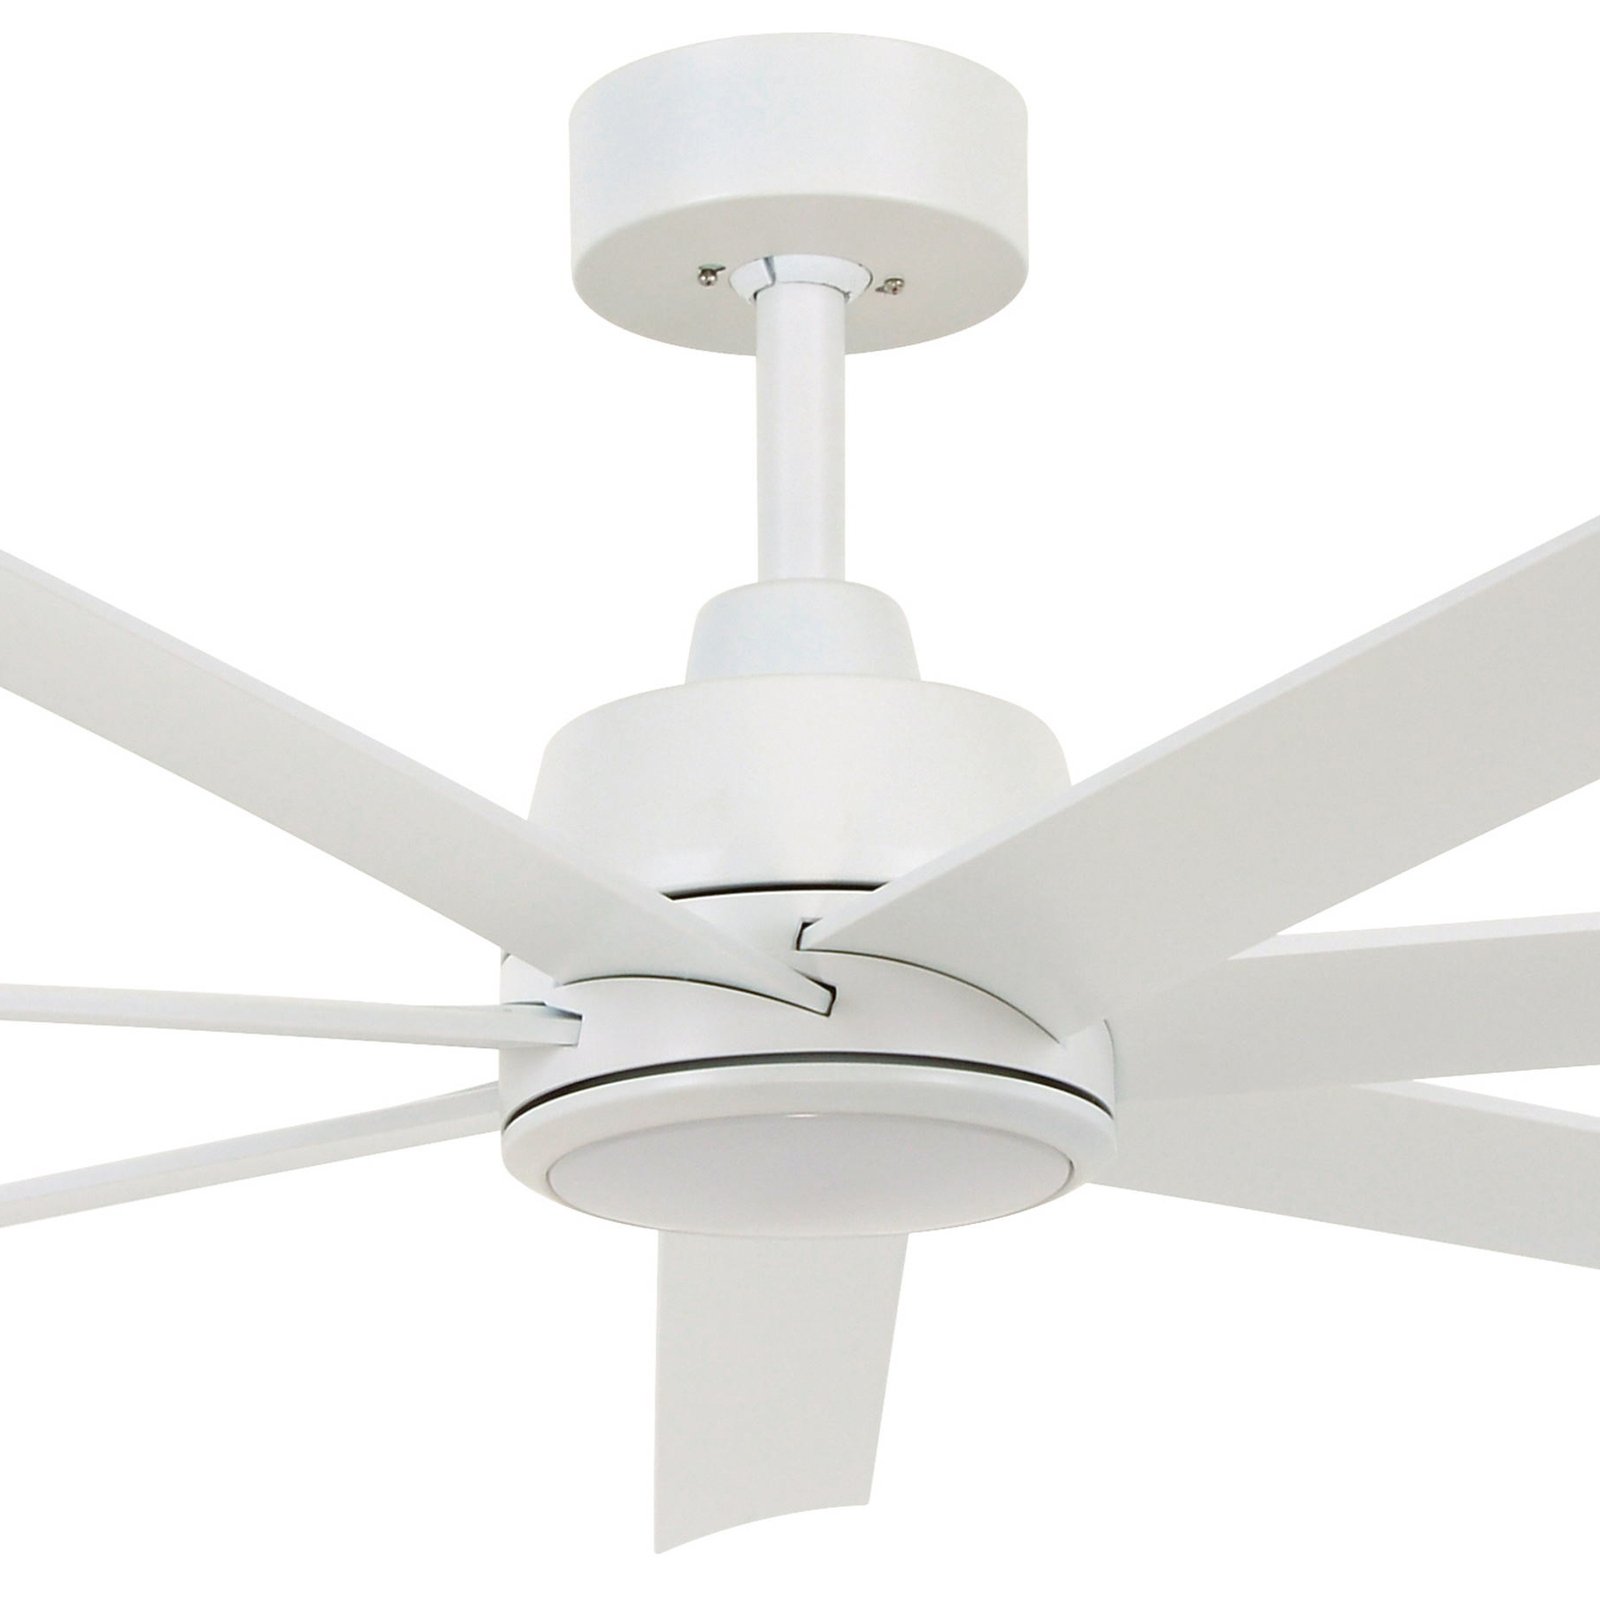 Beacon ceiling fan with light Atlanta white 142 cm quiet